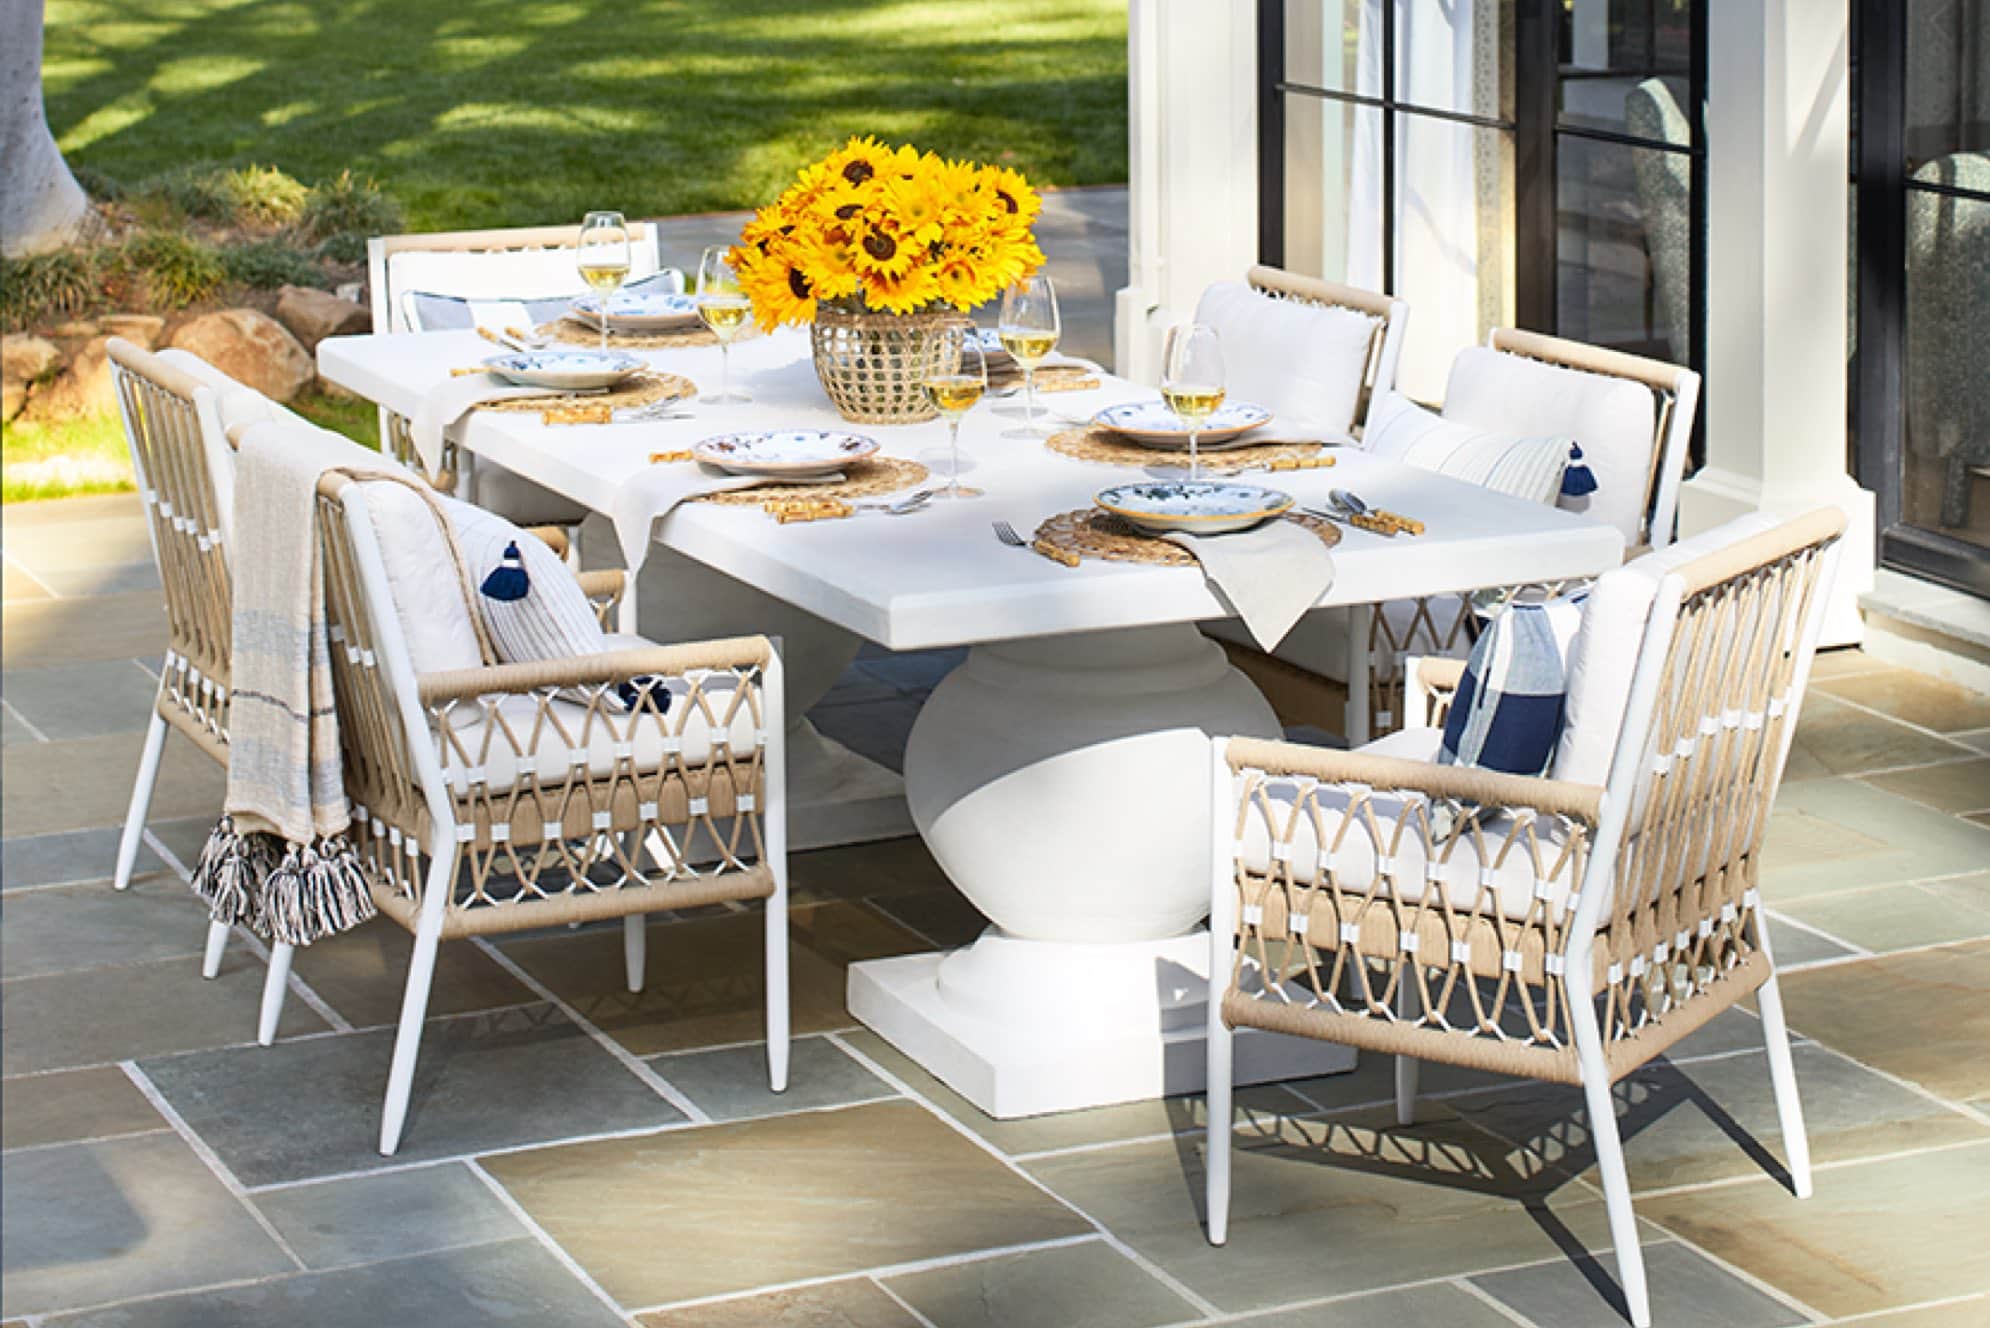 Outdoor Dining- serena & lily - dining al fresco - dining outdoors - outdoor dining